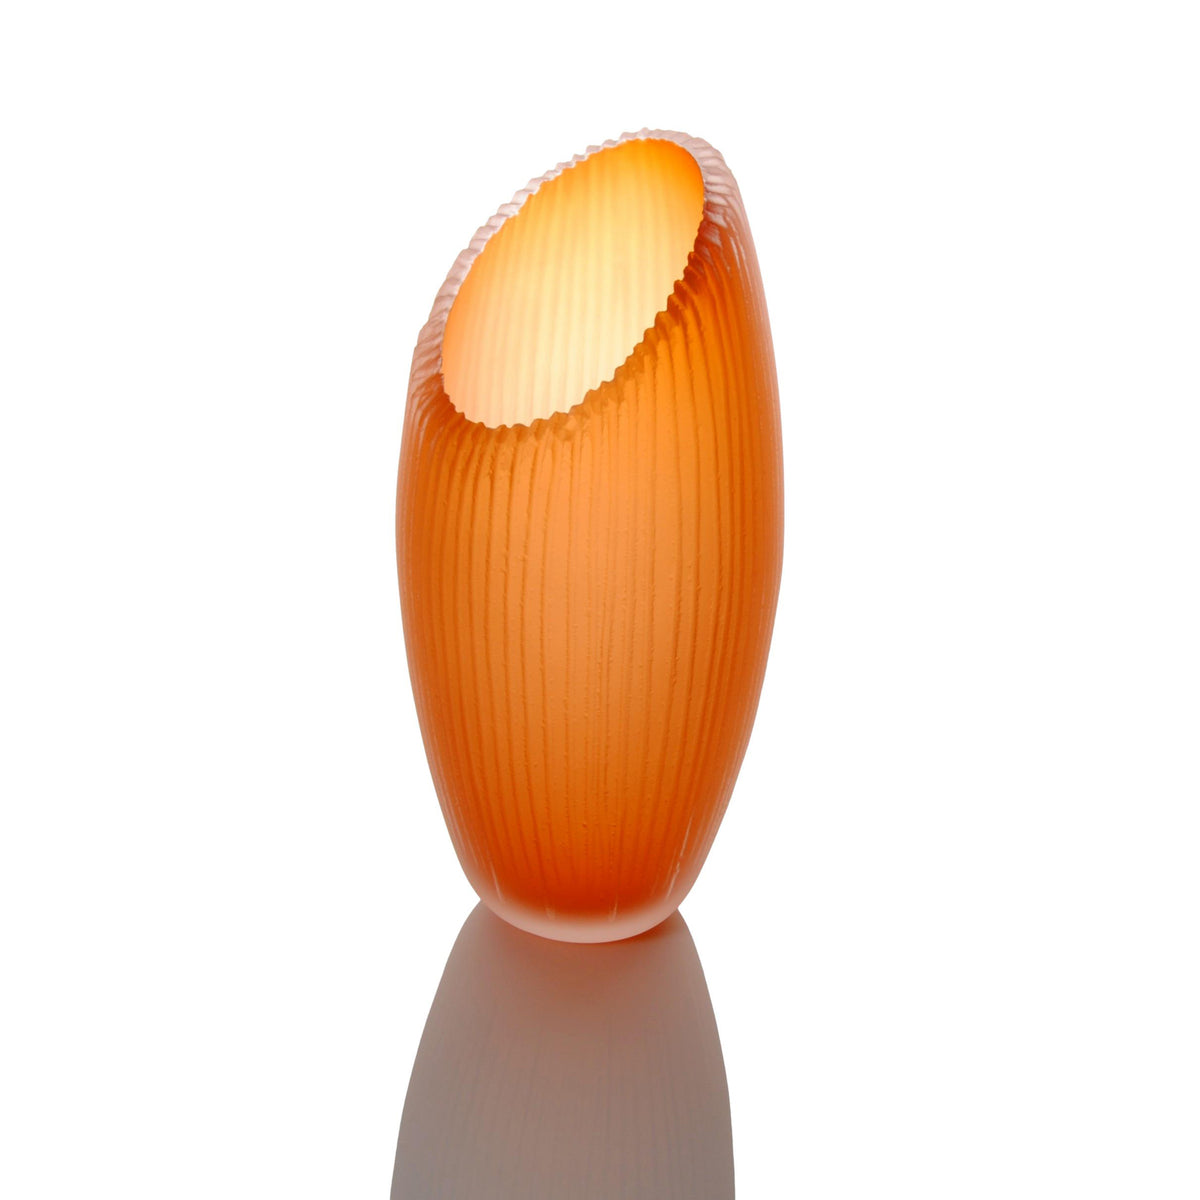 Courtney Downman - tangerine peak vase